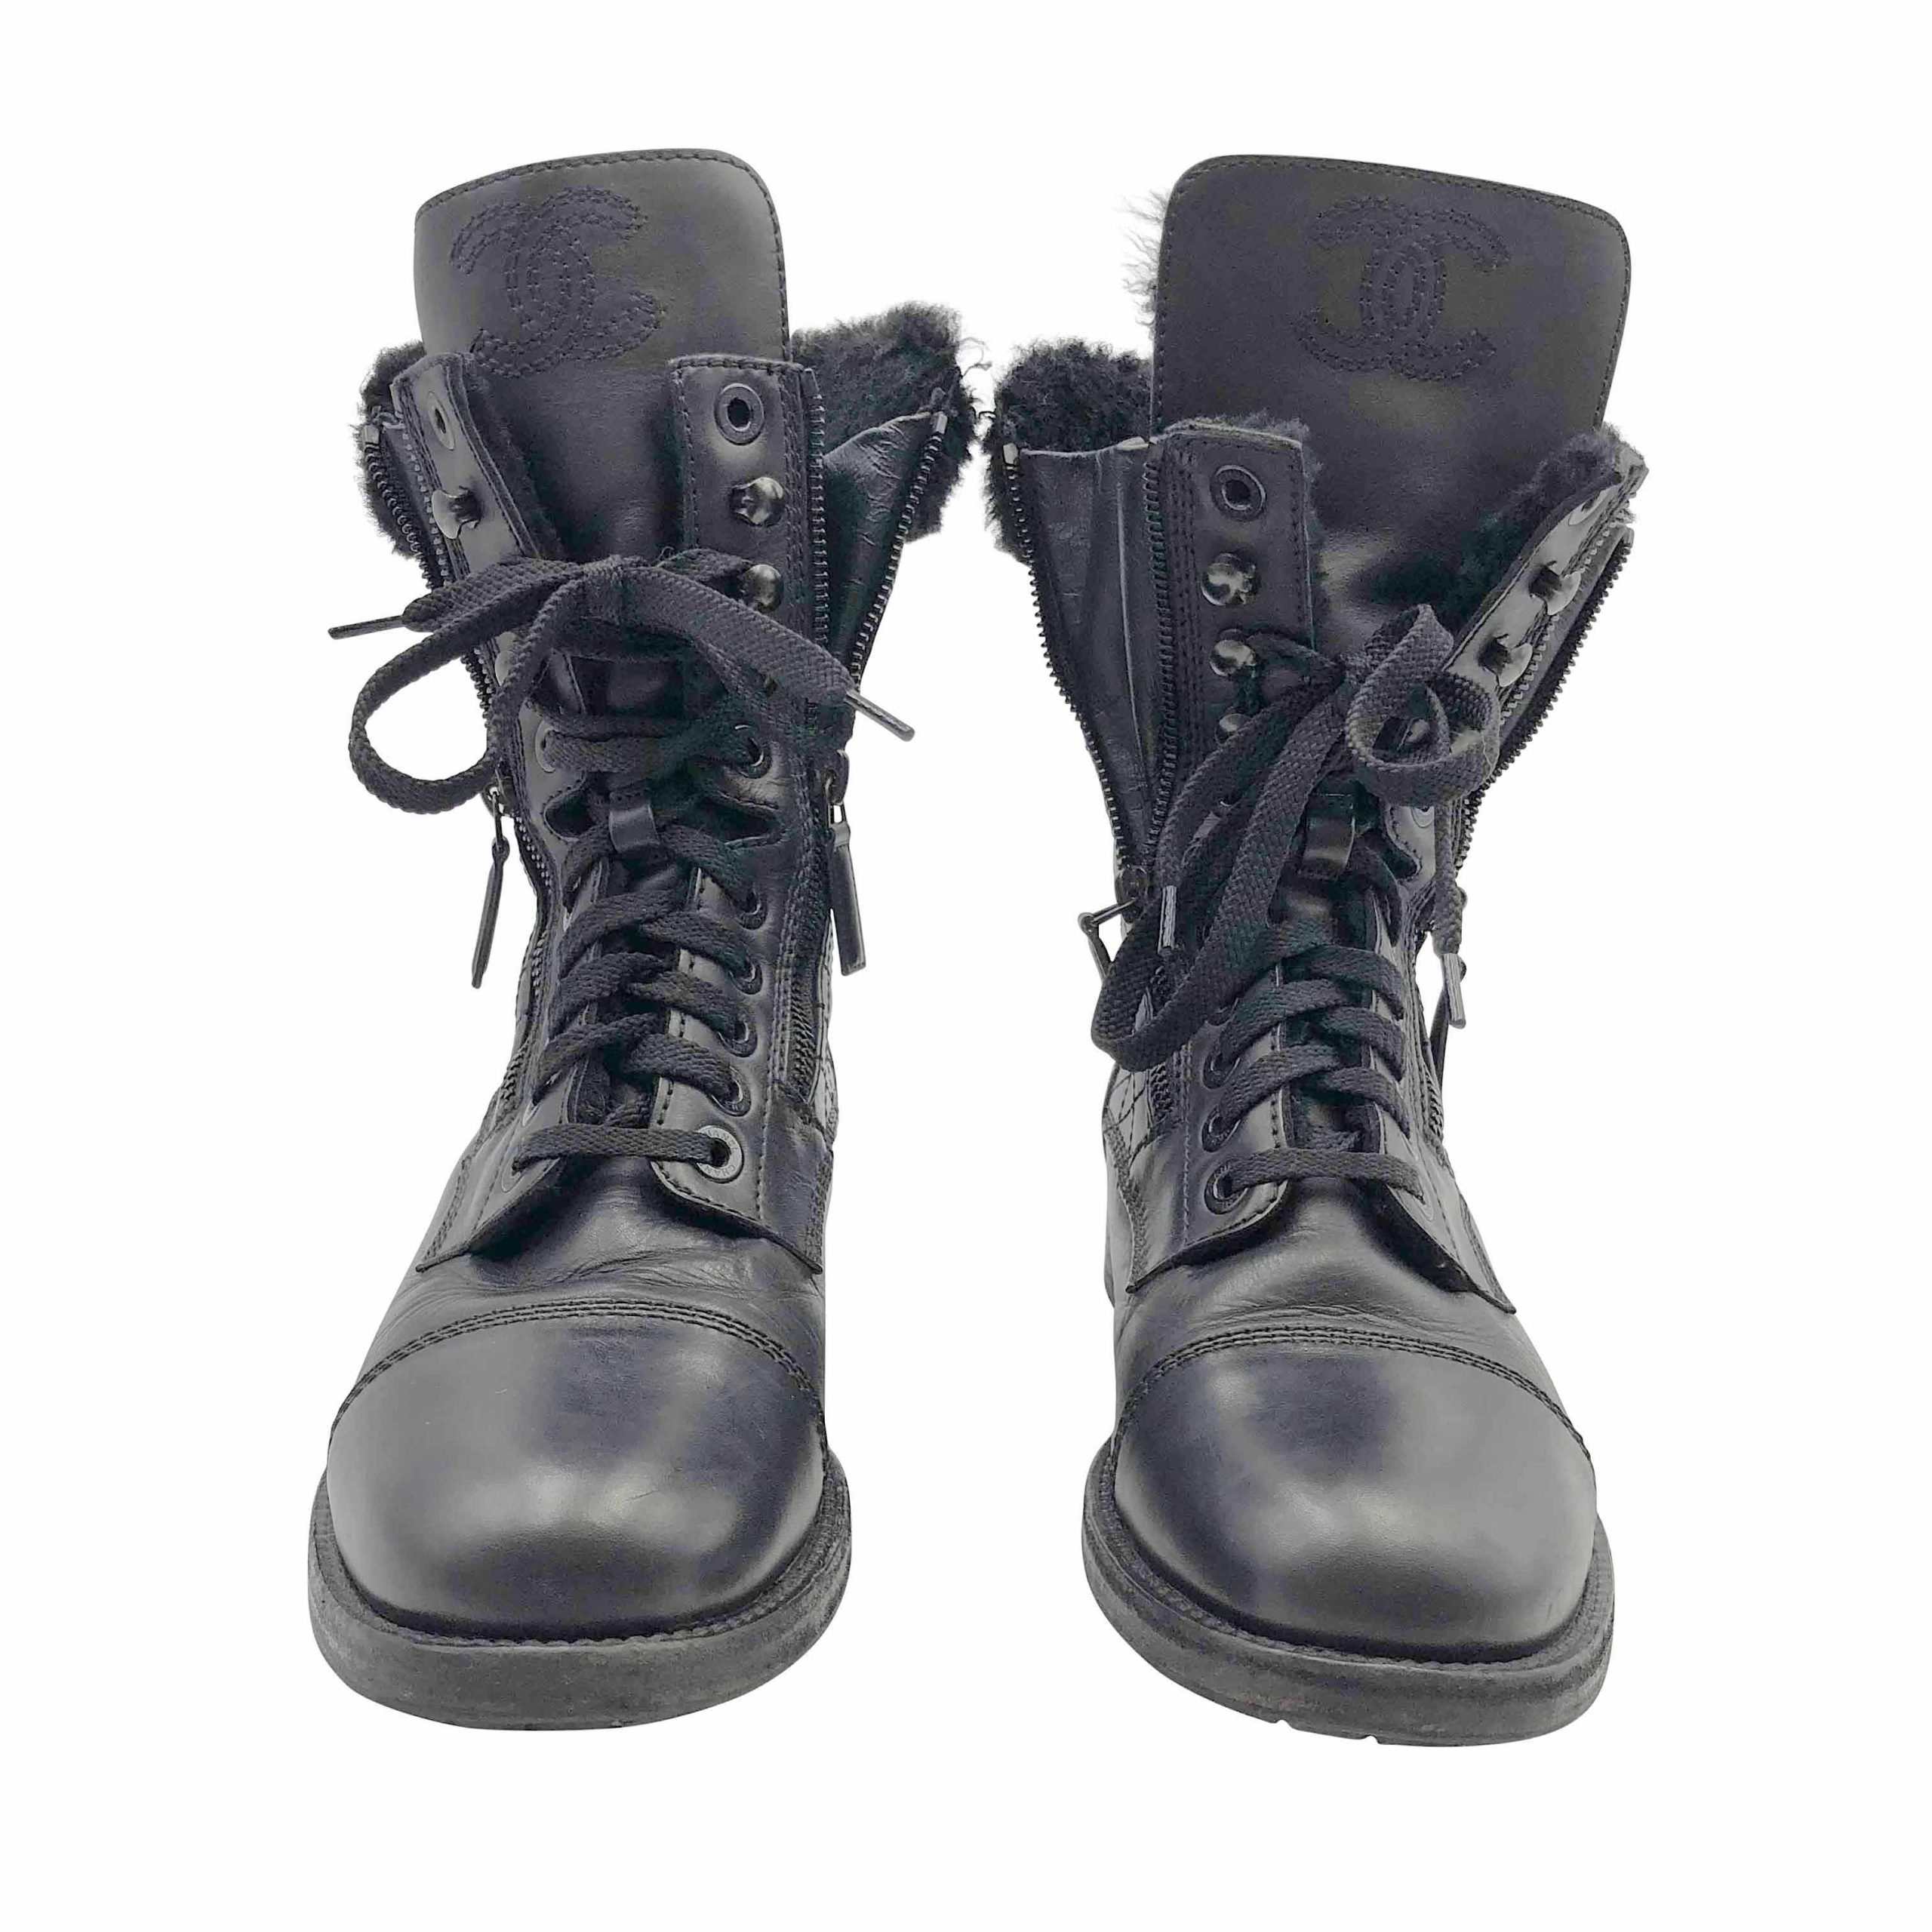 forpligtelse Uforglemmelig Samarbejde Chanel combat boots in black quilted leather with fur lining - DOWNTOWN  UPTOWN Genève